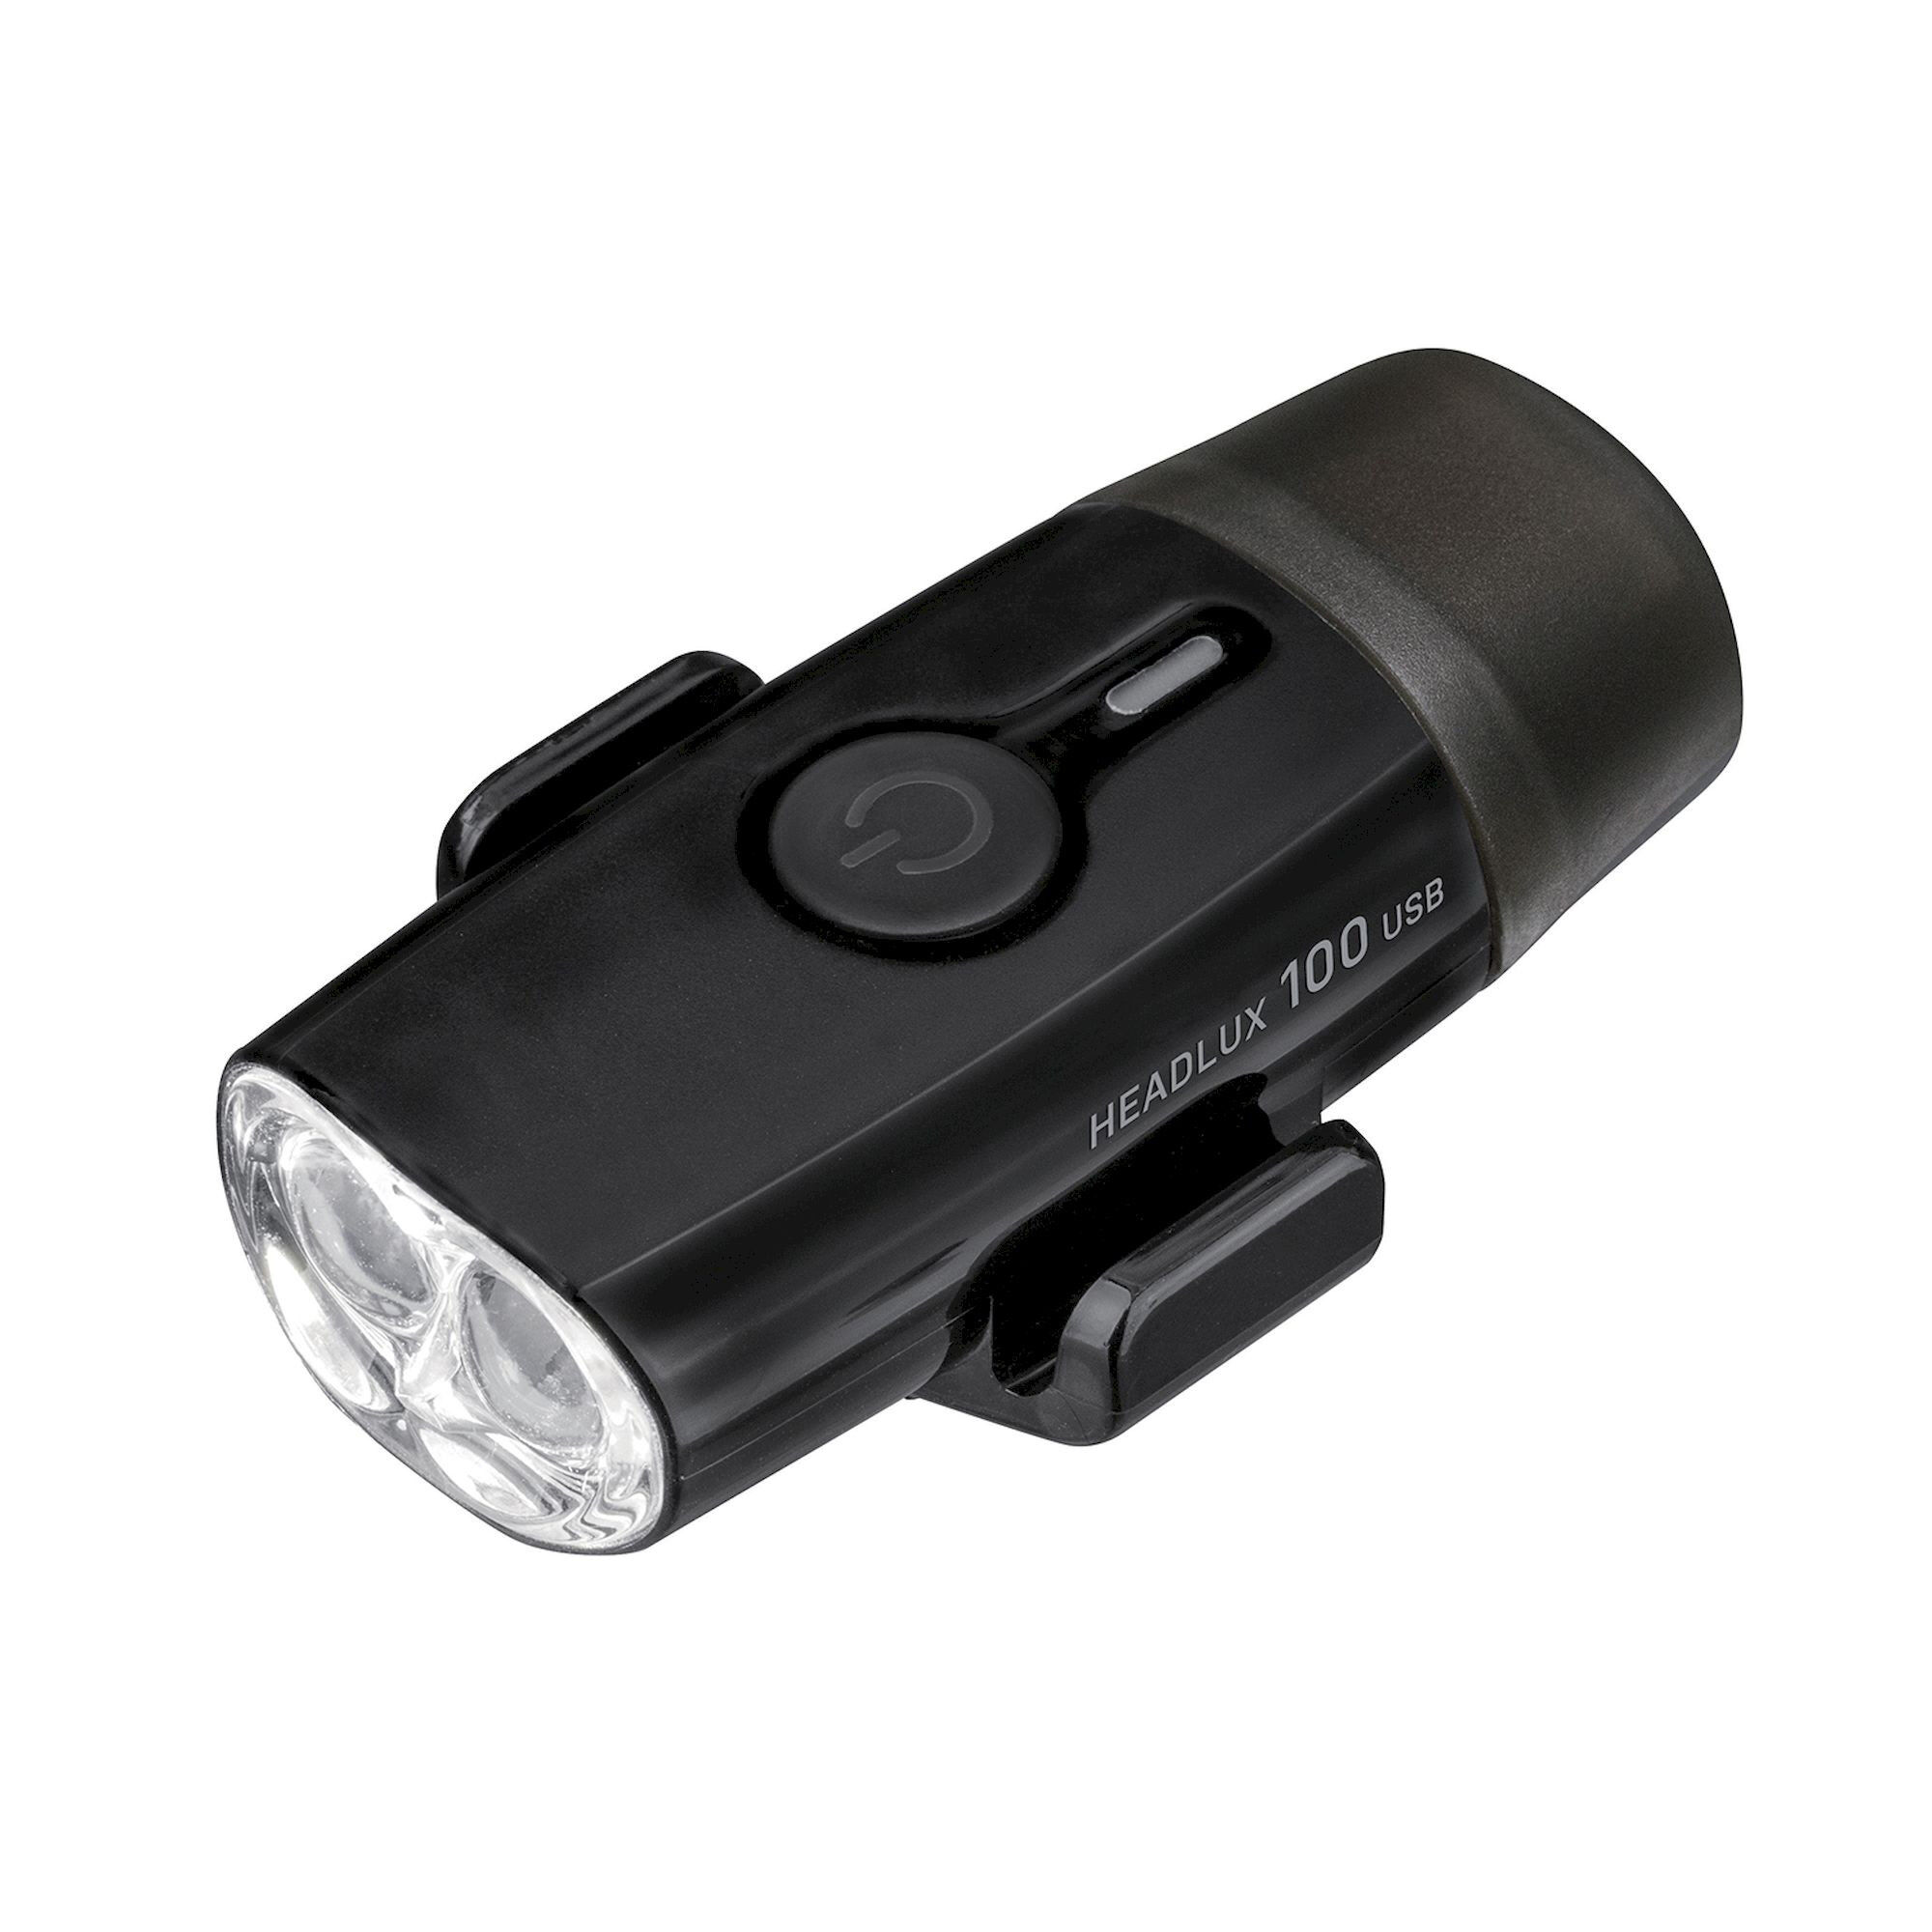 Topeak HeadLux 100 USB - Bike front light | Hardloop